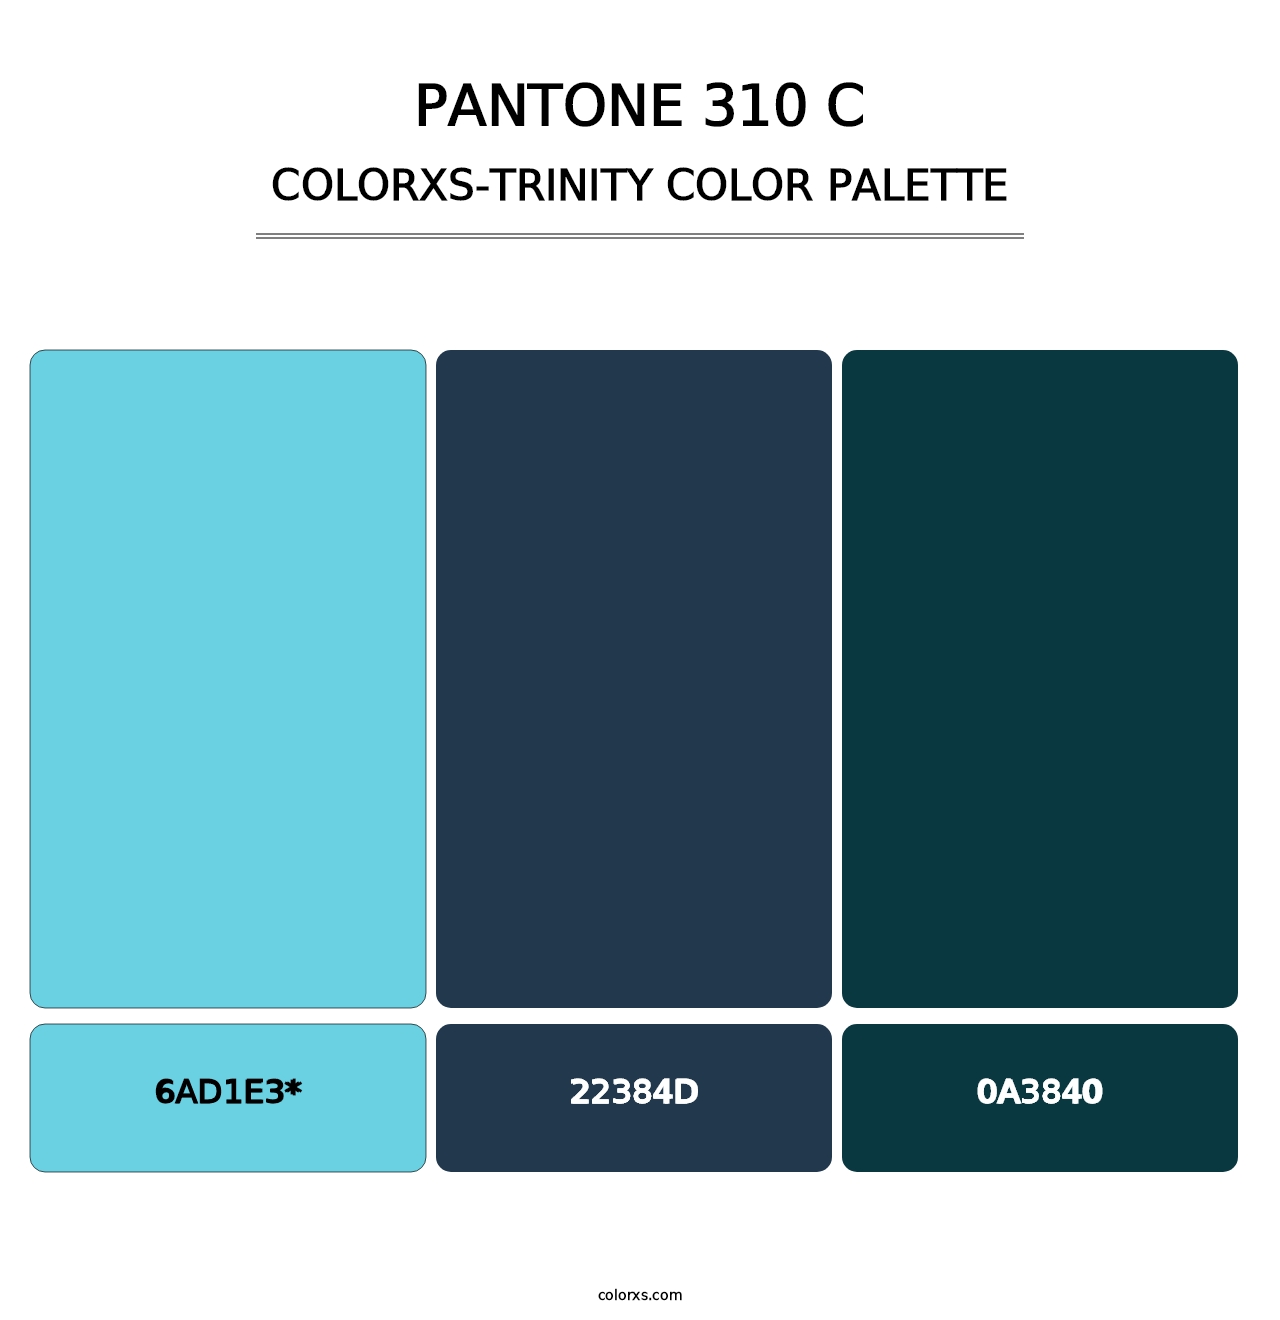 PANTONE 310 C - Colorxs Trinity Palette